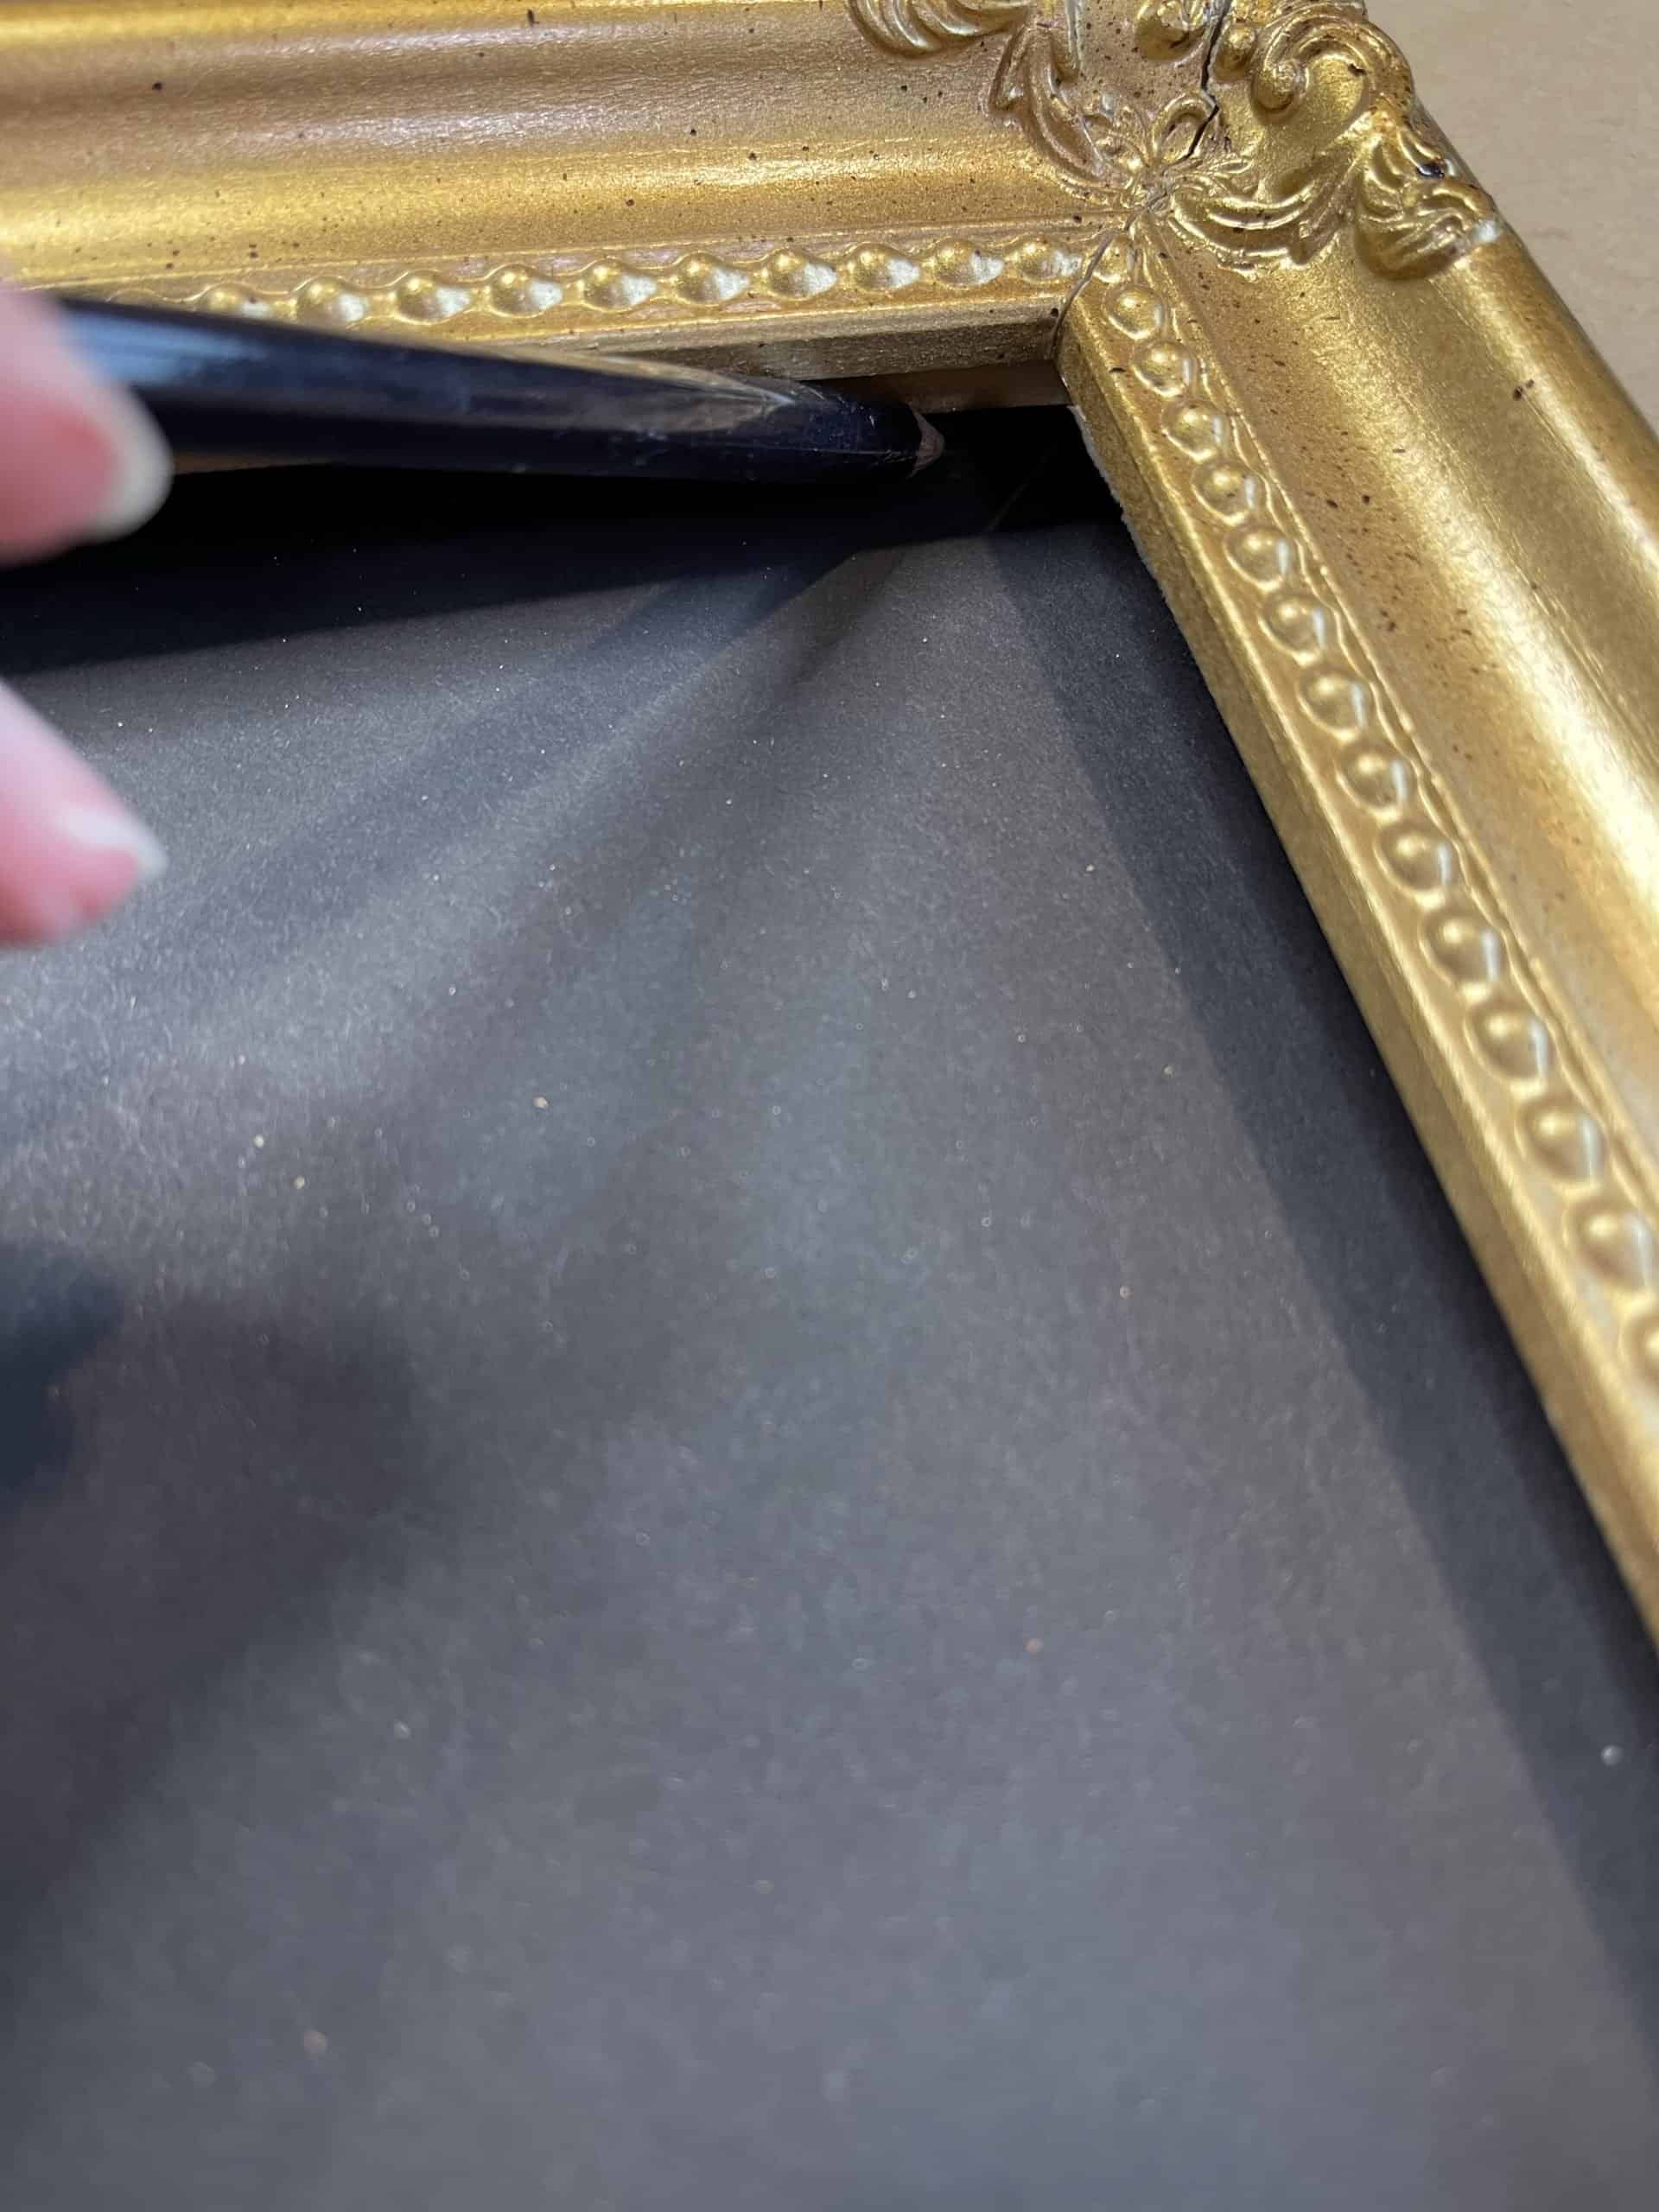 Trace out frame on foam board.